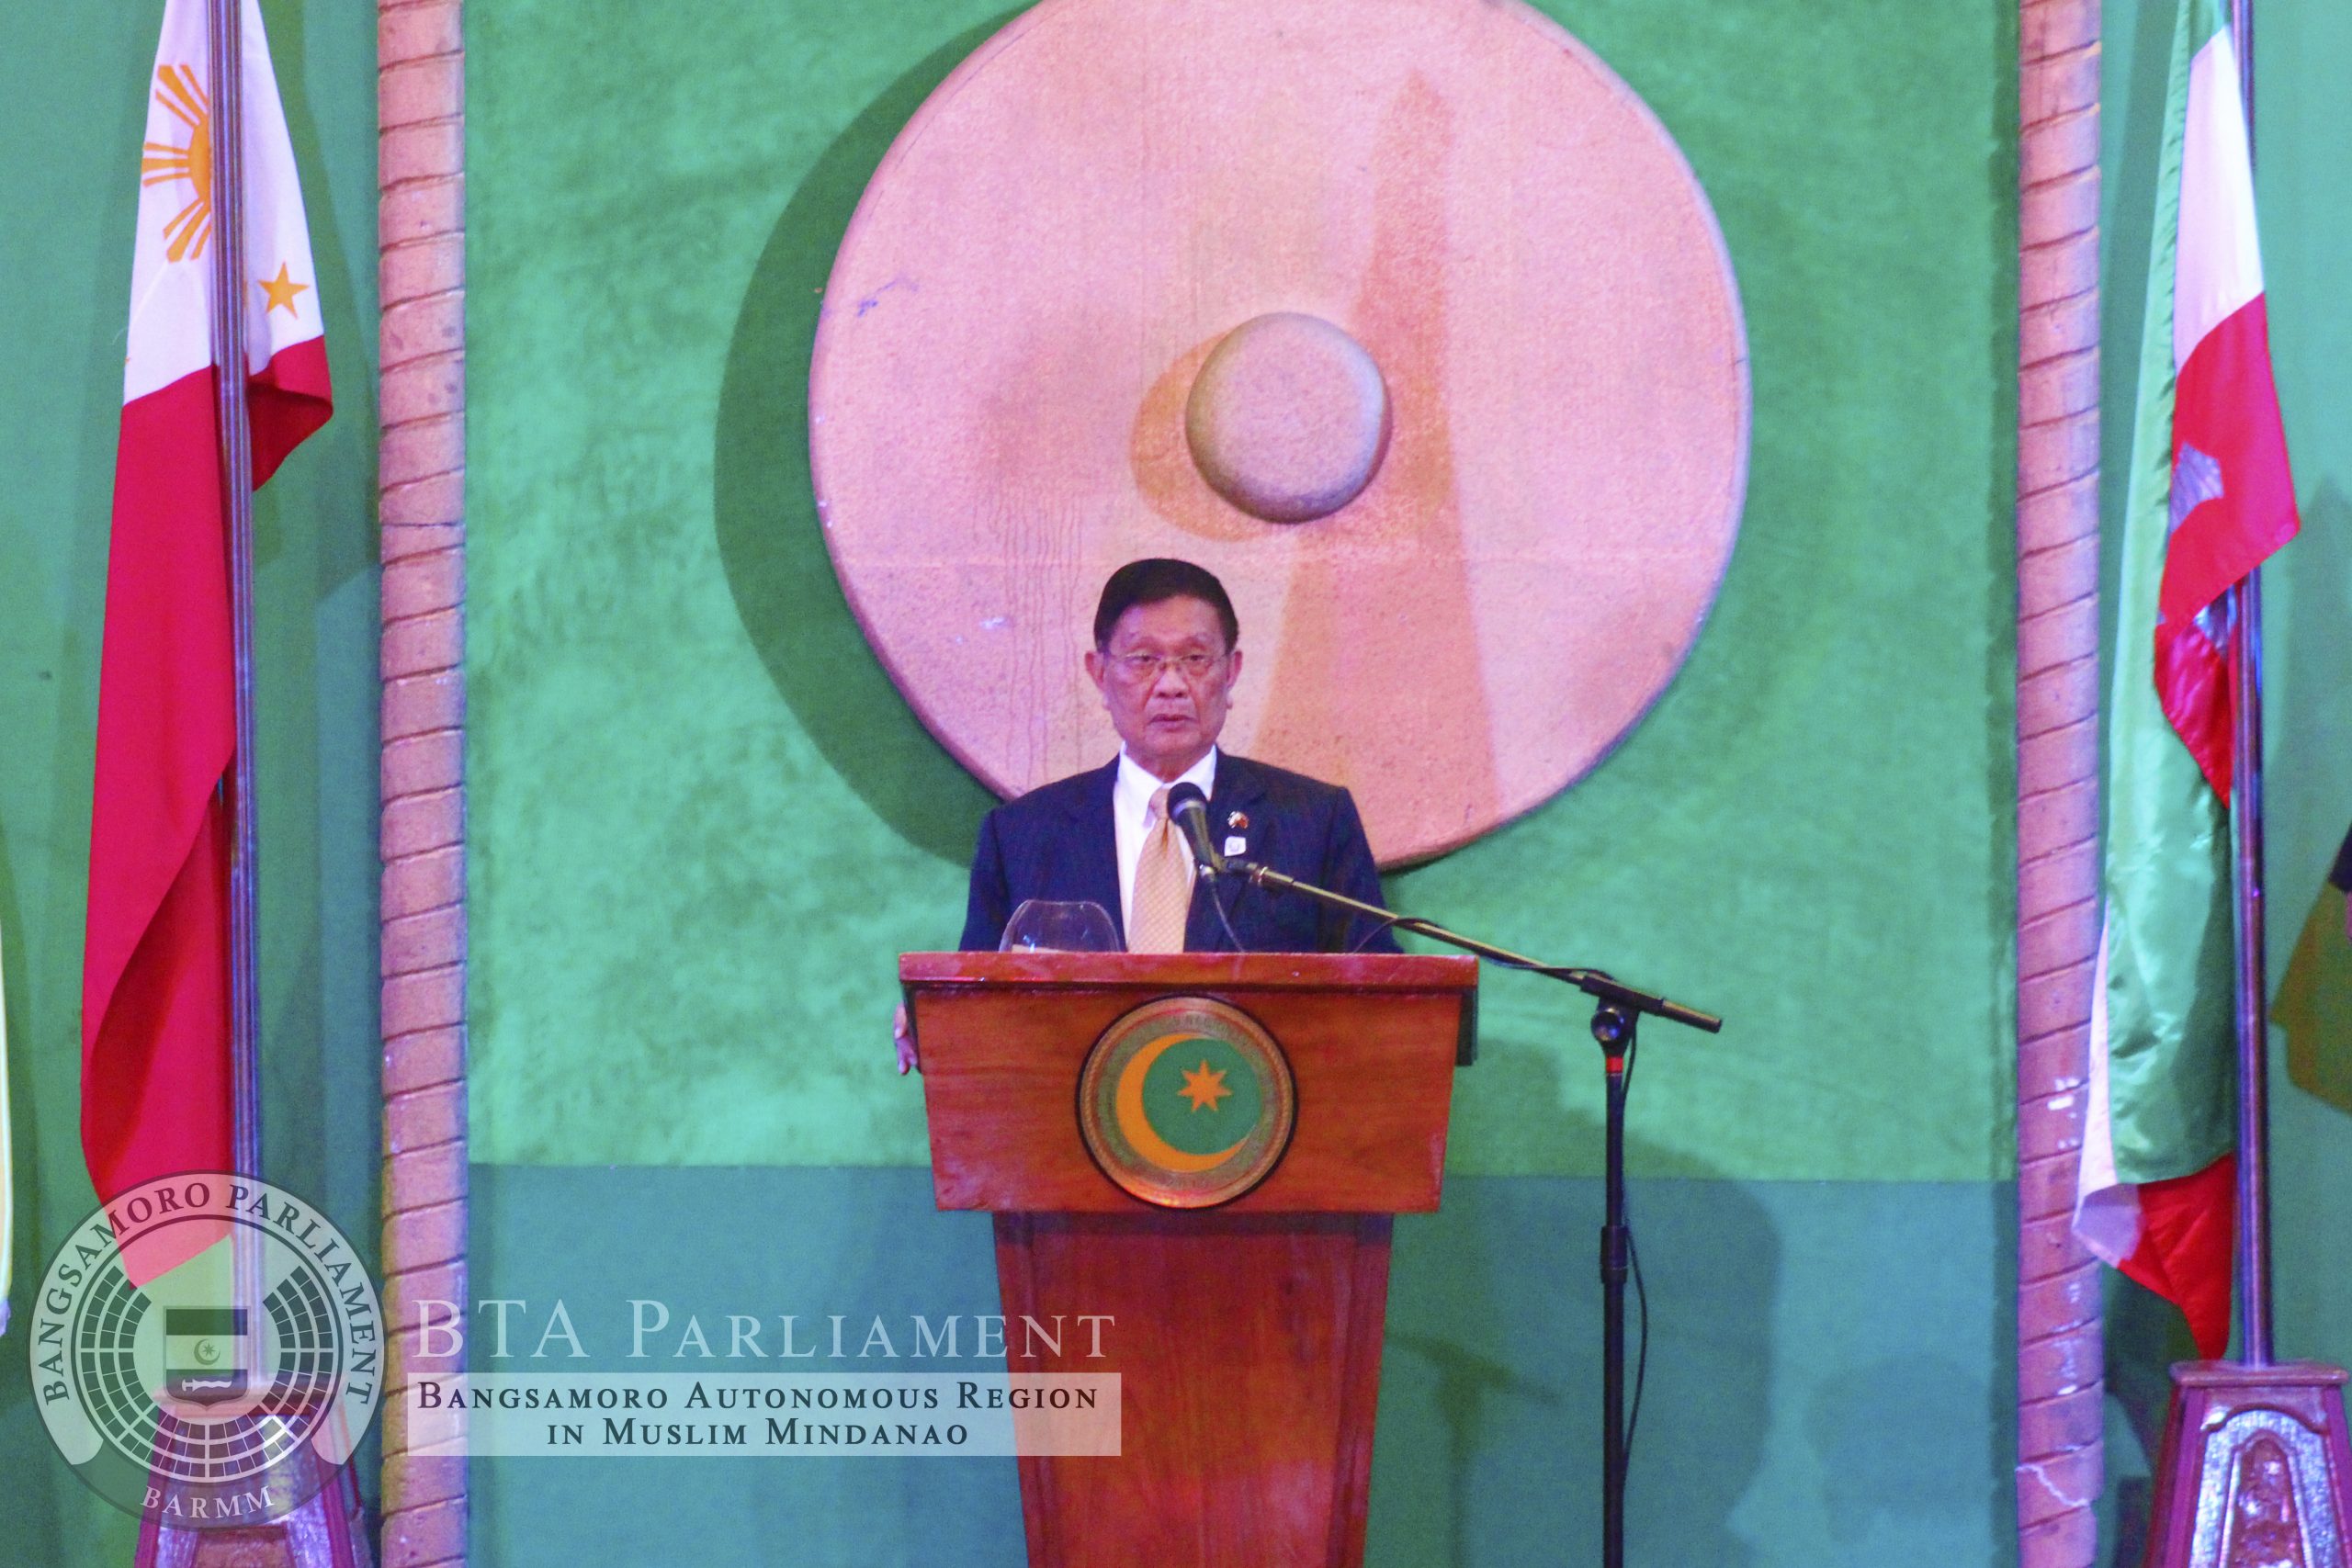 Speaker Balindong lauds development on BTA term extension